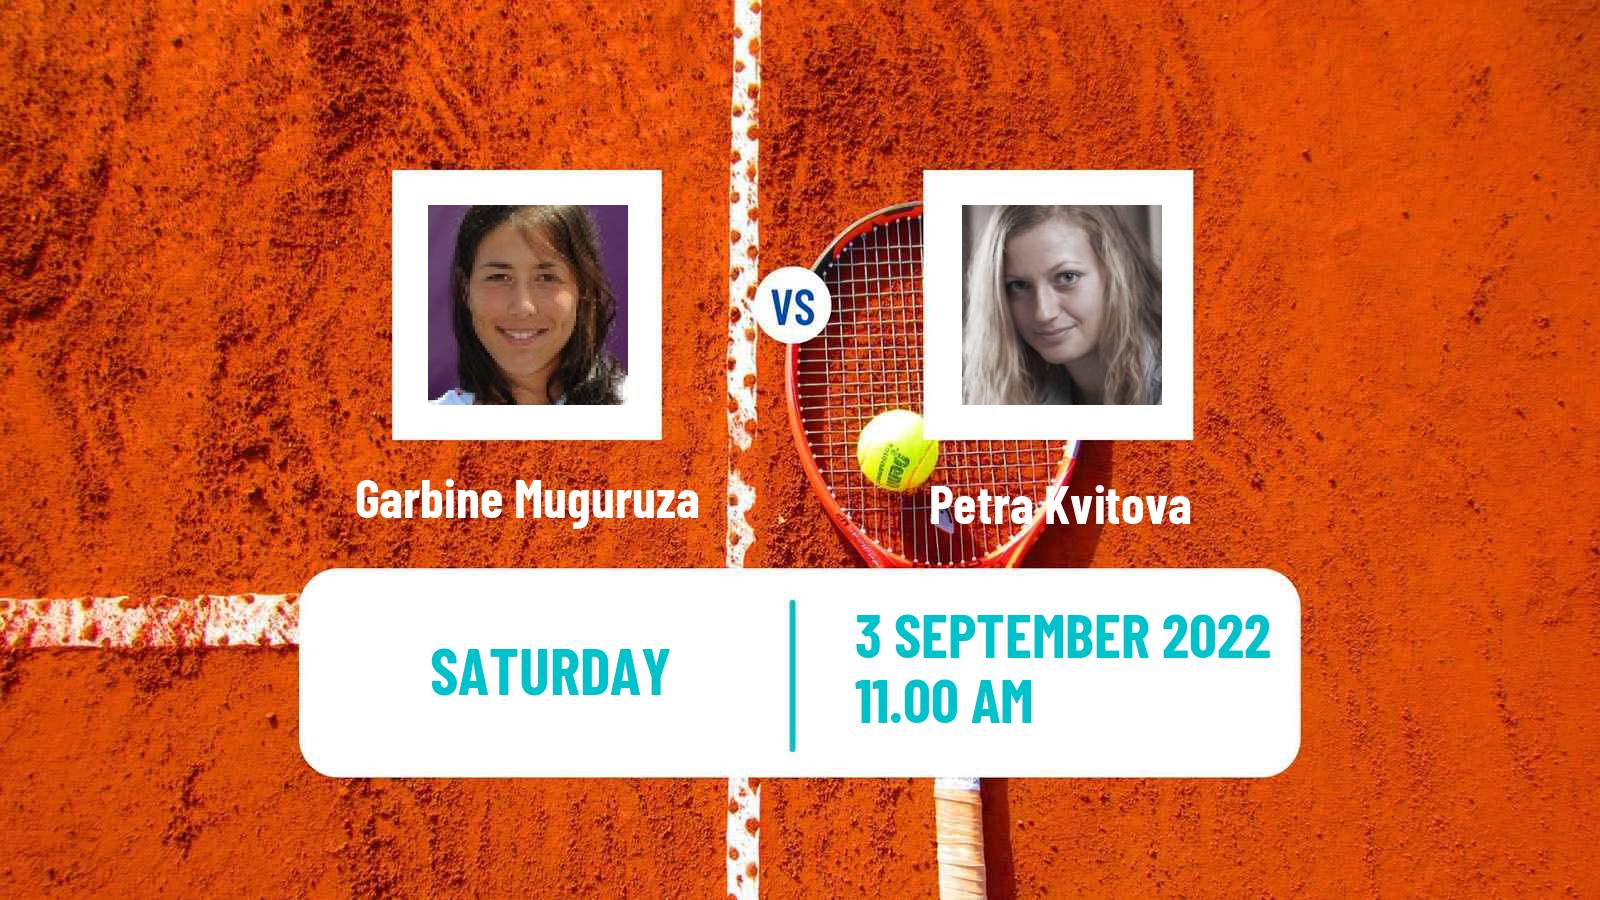 Tennis WTA US Open Garbine Muguruza - Petra Kvitova